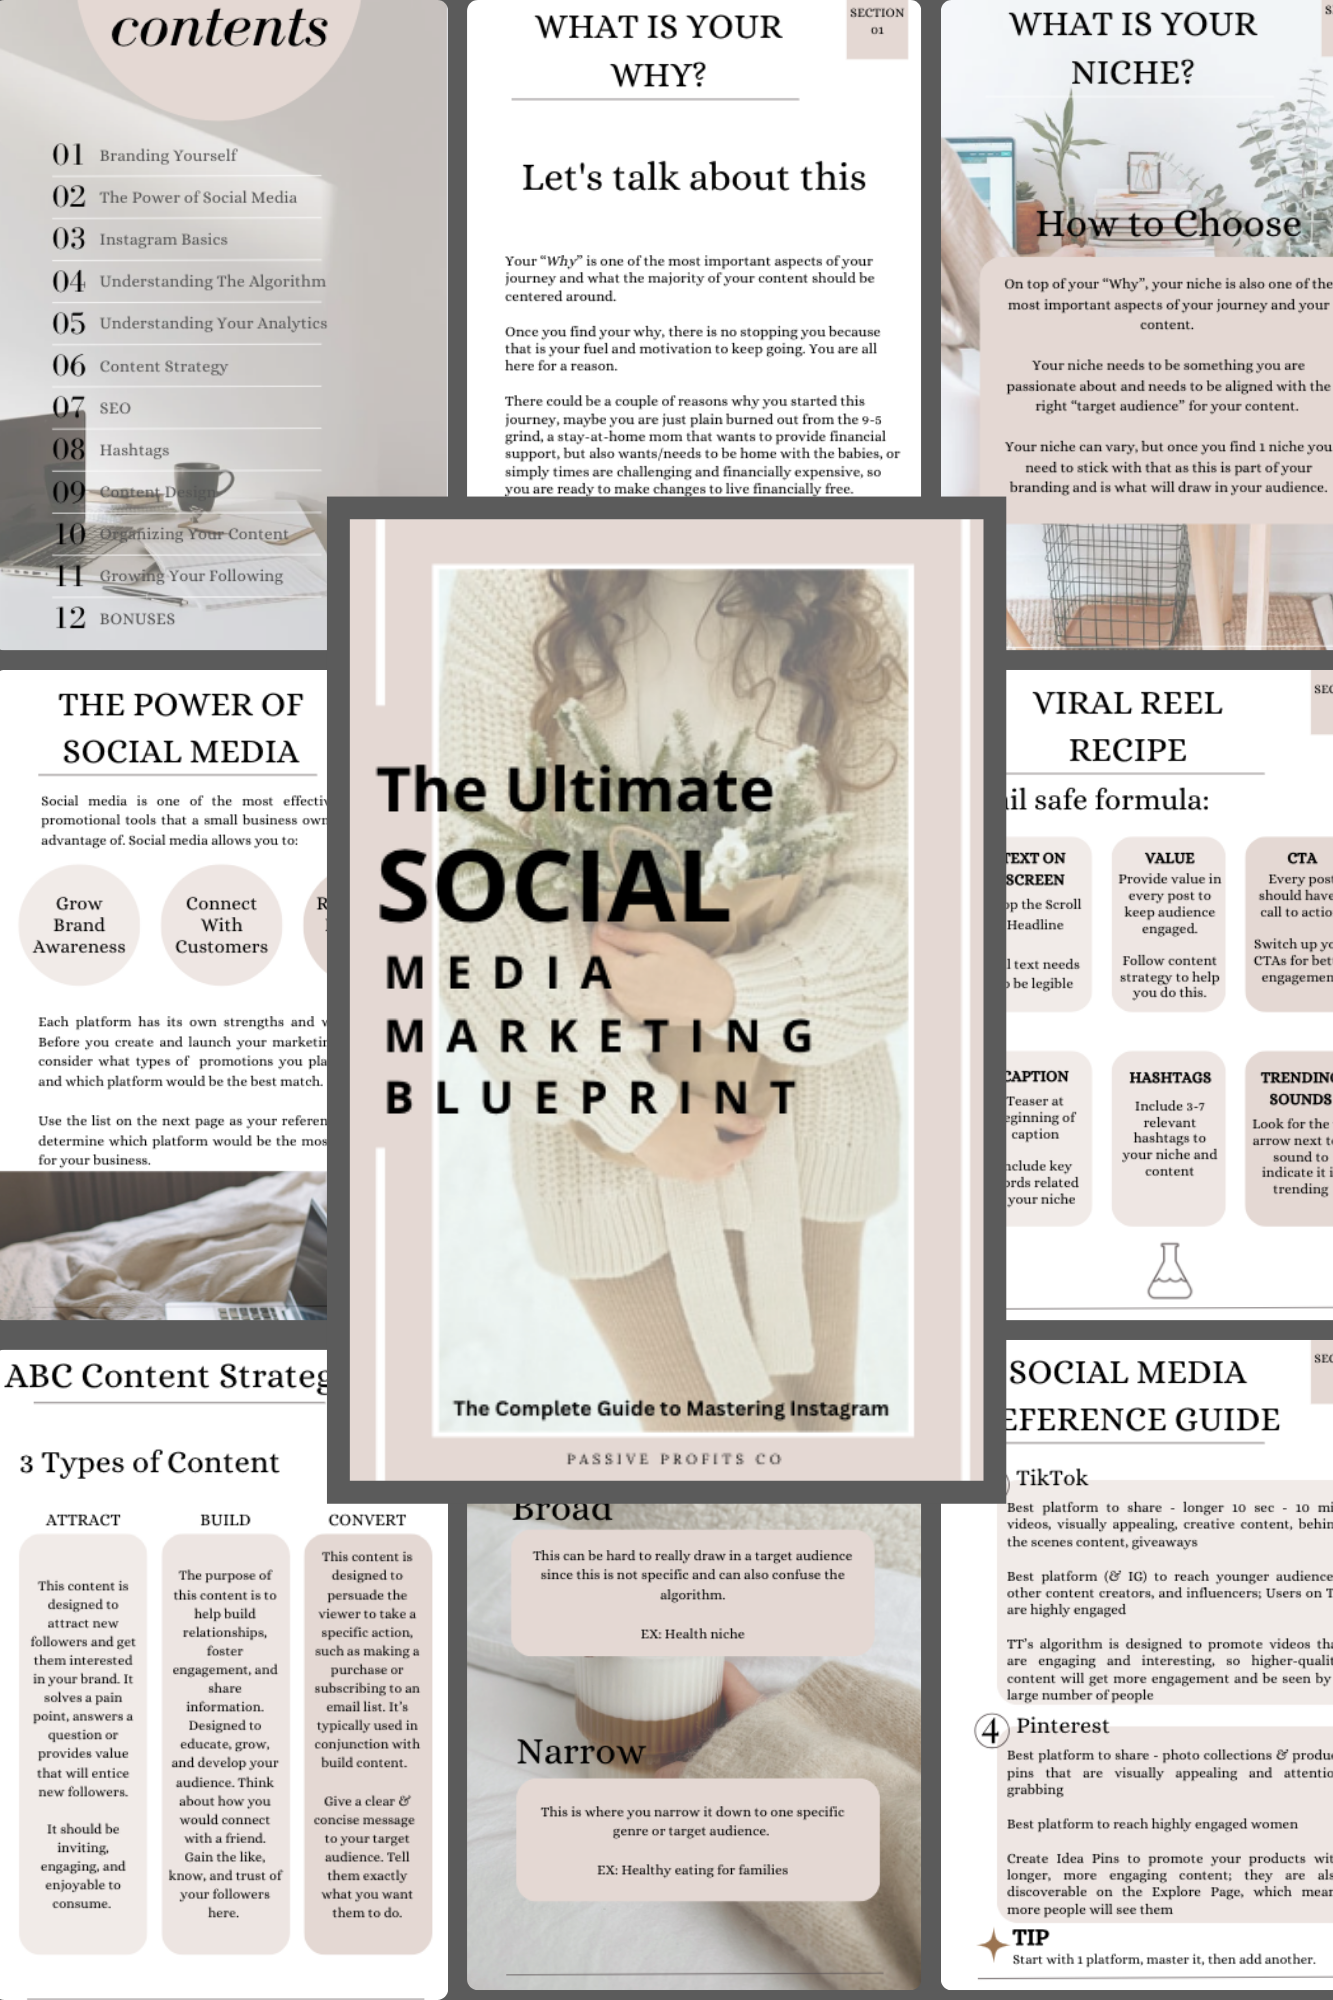 The Ultimate Social Media Blueprint